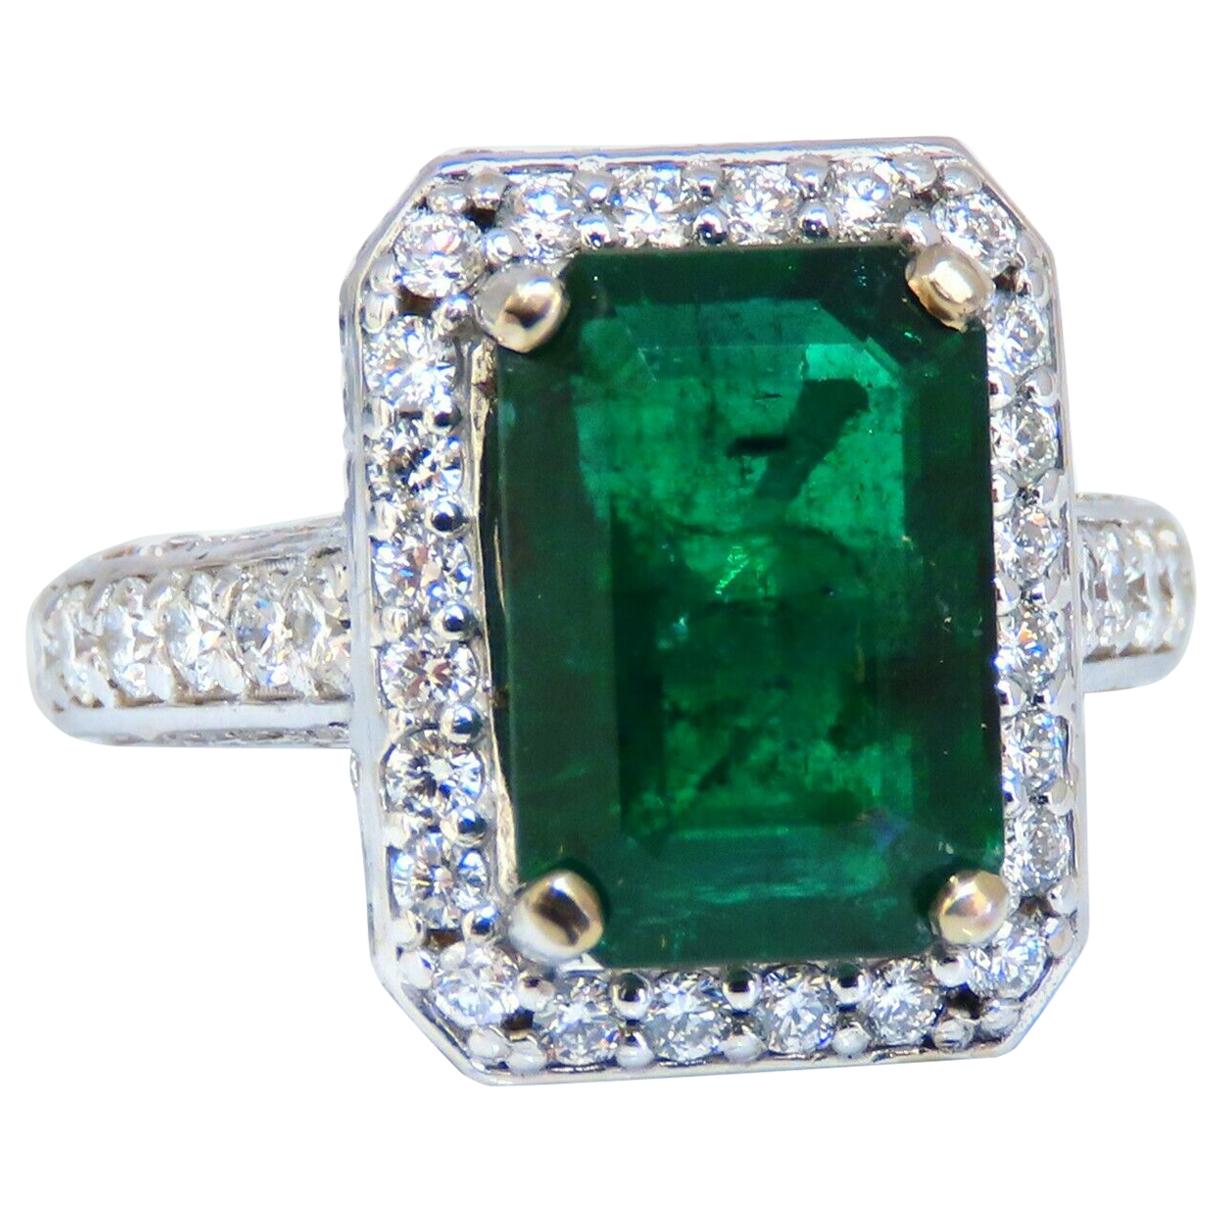 Bague Art déco en or 14 carats sertie d'un halo de perles avec diamants et émeraudes naturelles vert vif de 5,52 carats